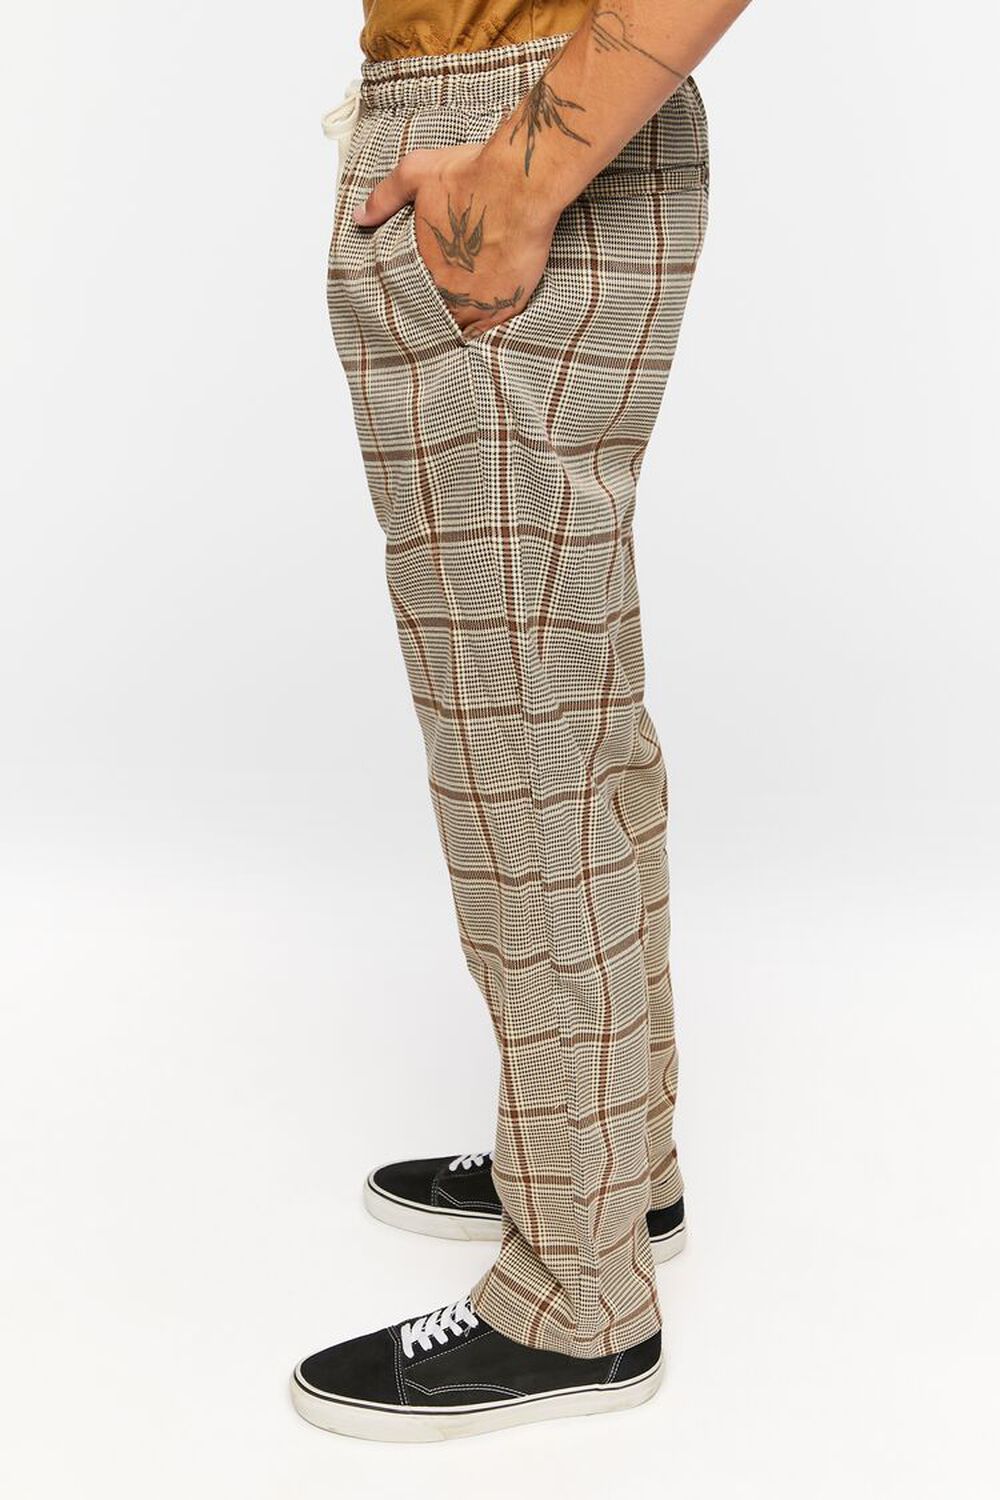 BROWN/MULTI Plaid Drawstring Trousers, image 3